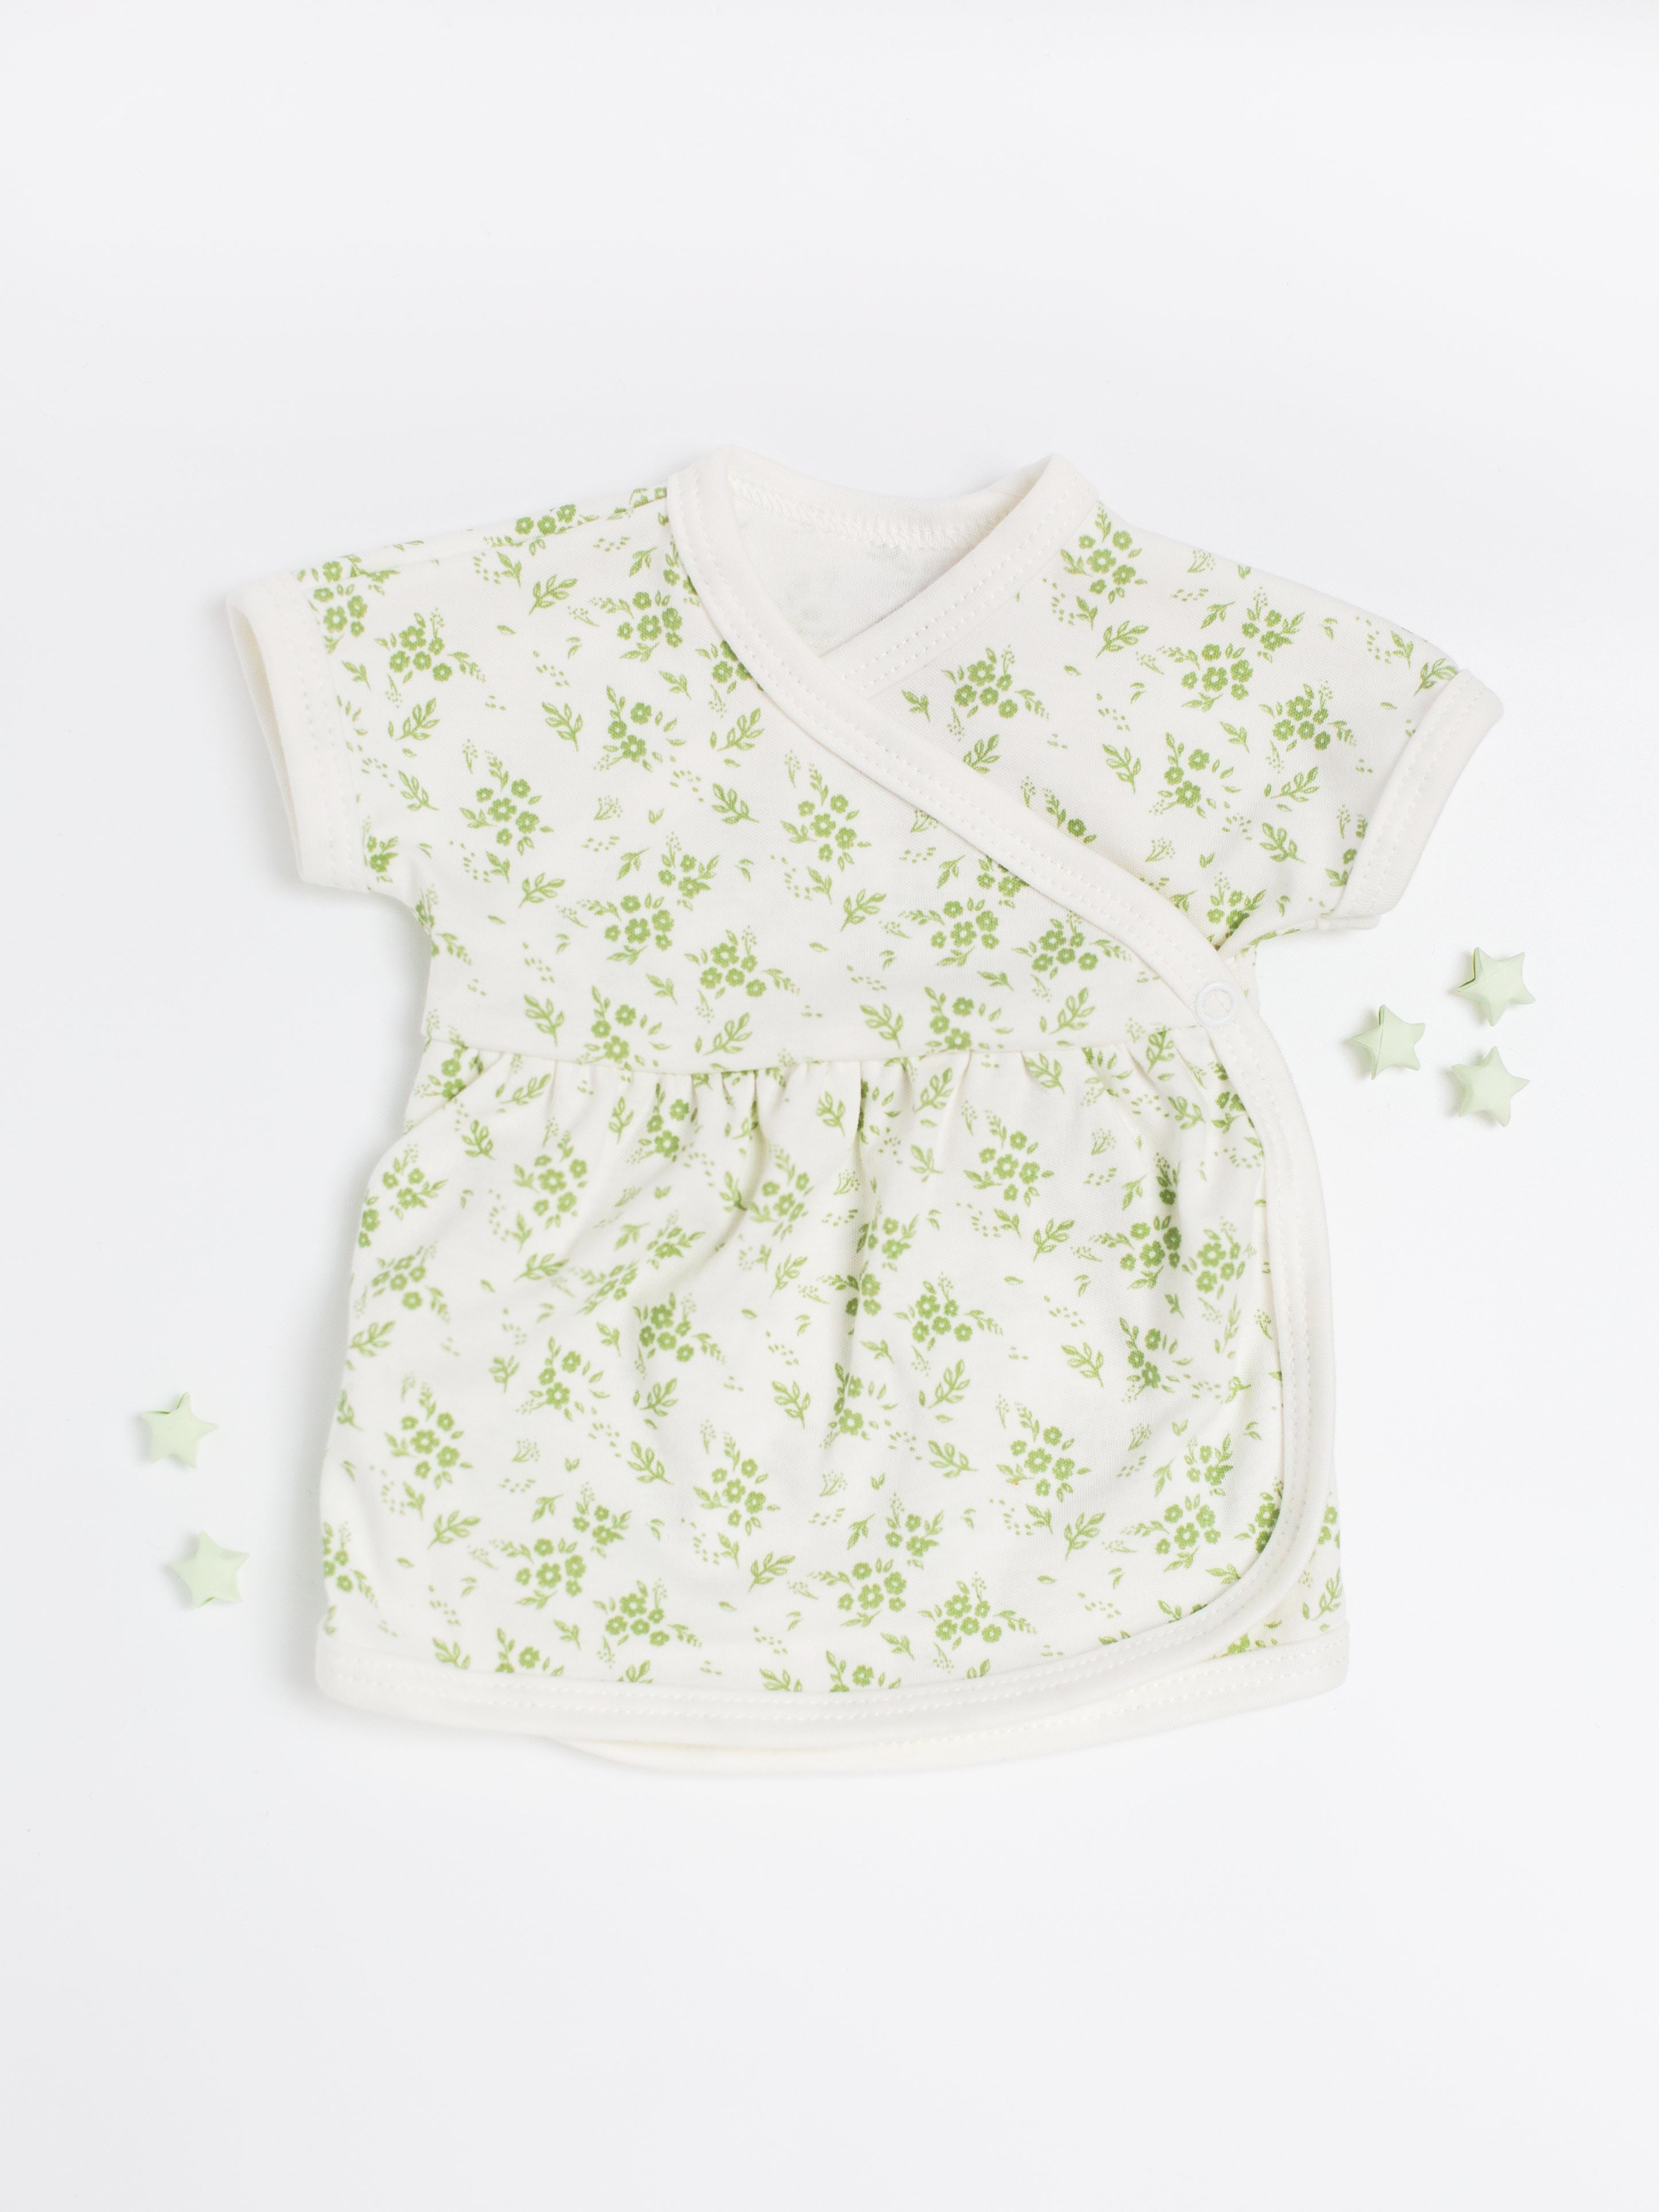 Dress, Apple Floral, Premium 100% Organic Cotton Dress Tiny & Small 